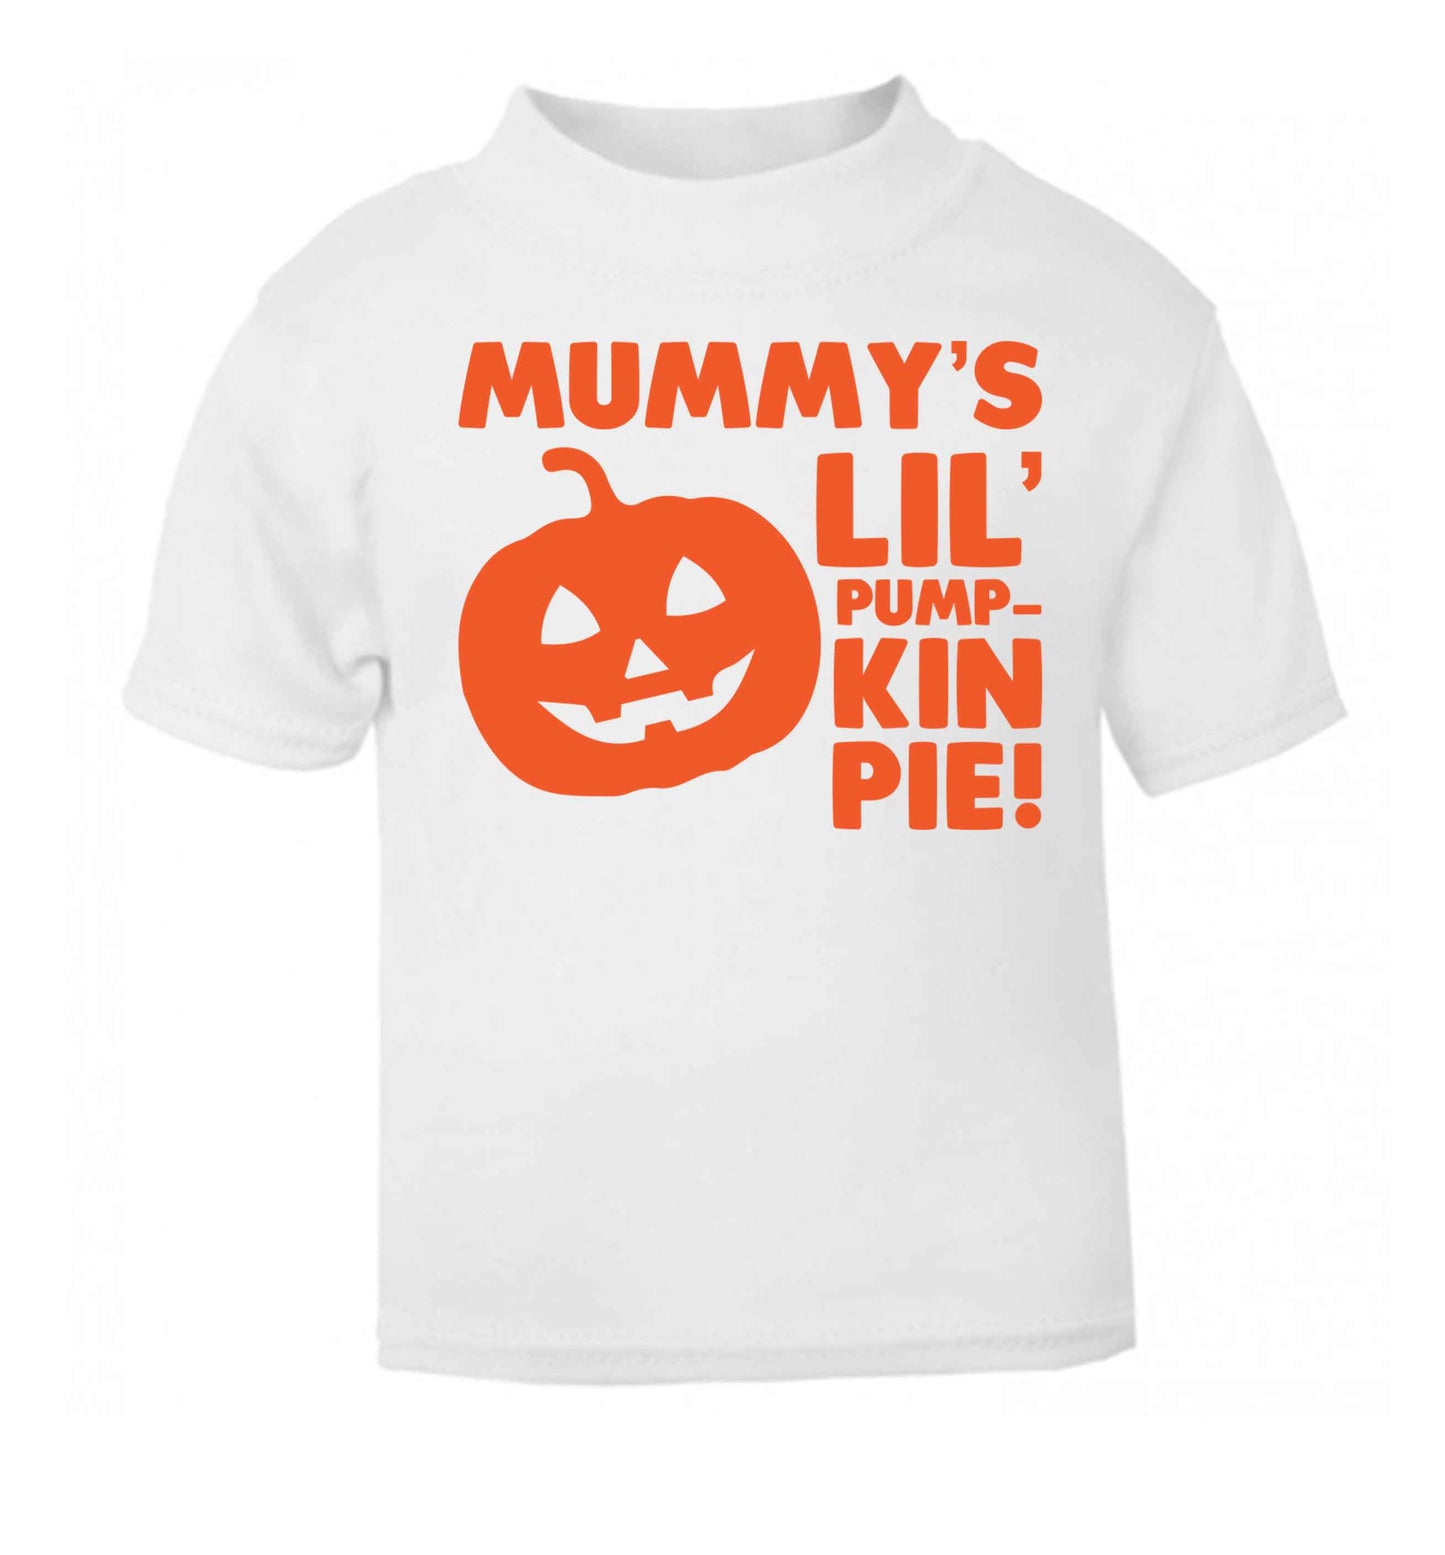 Mummy's lil' pumpkin pie white baby toddler Tshirt 2 Years